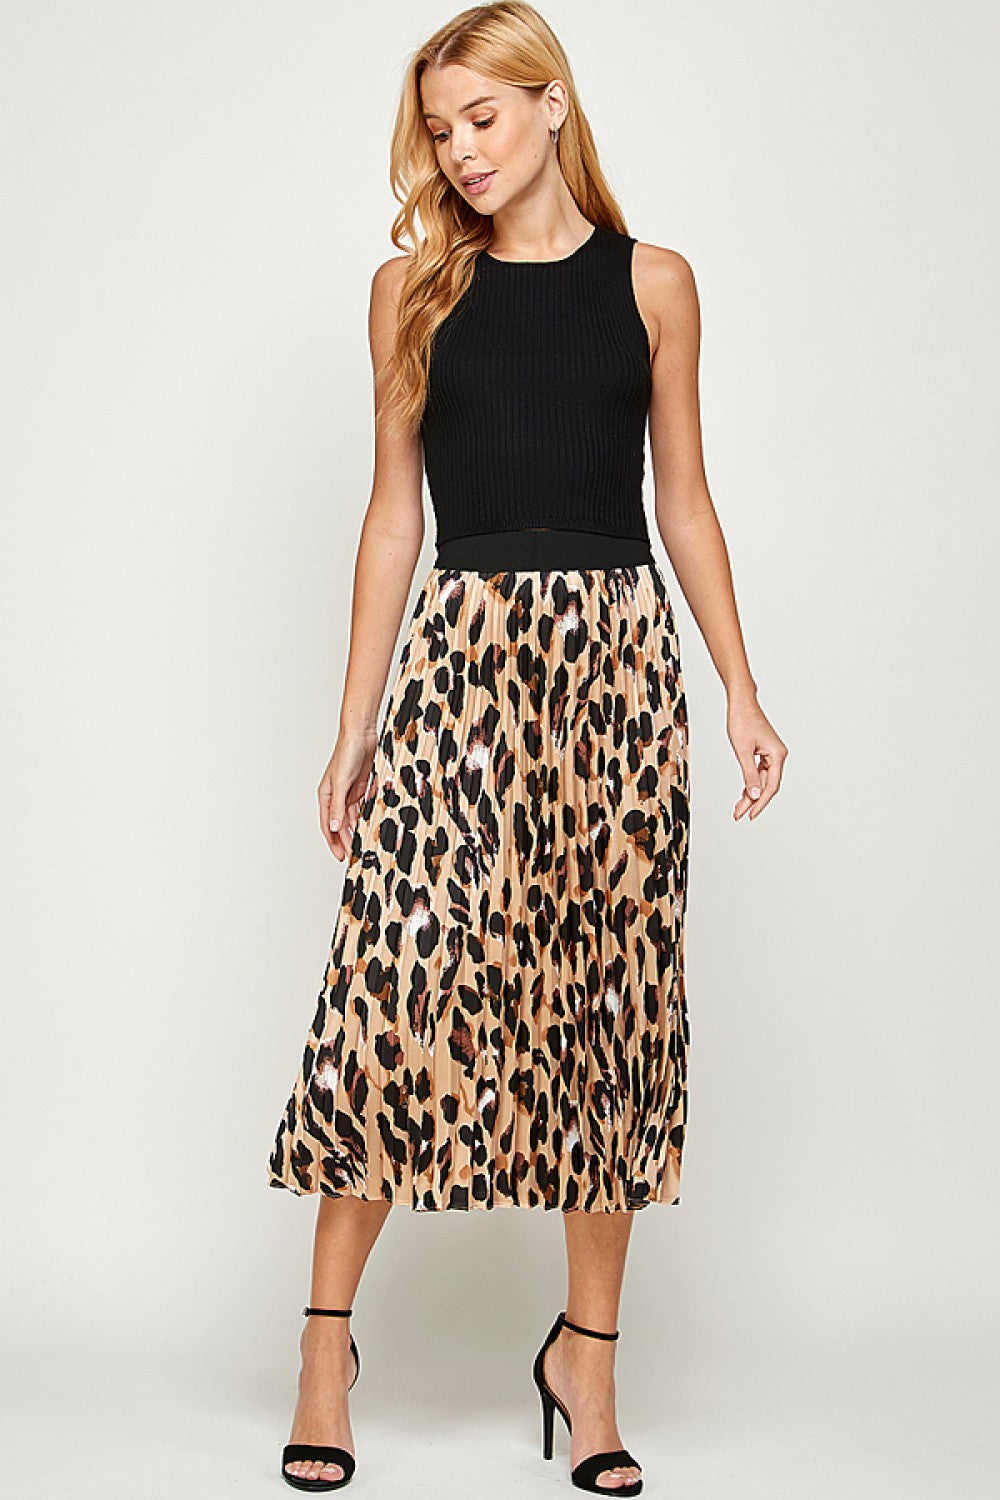 Courtney pleated leopard skirt